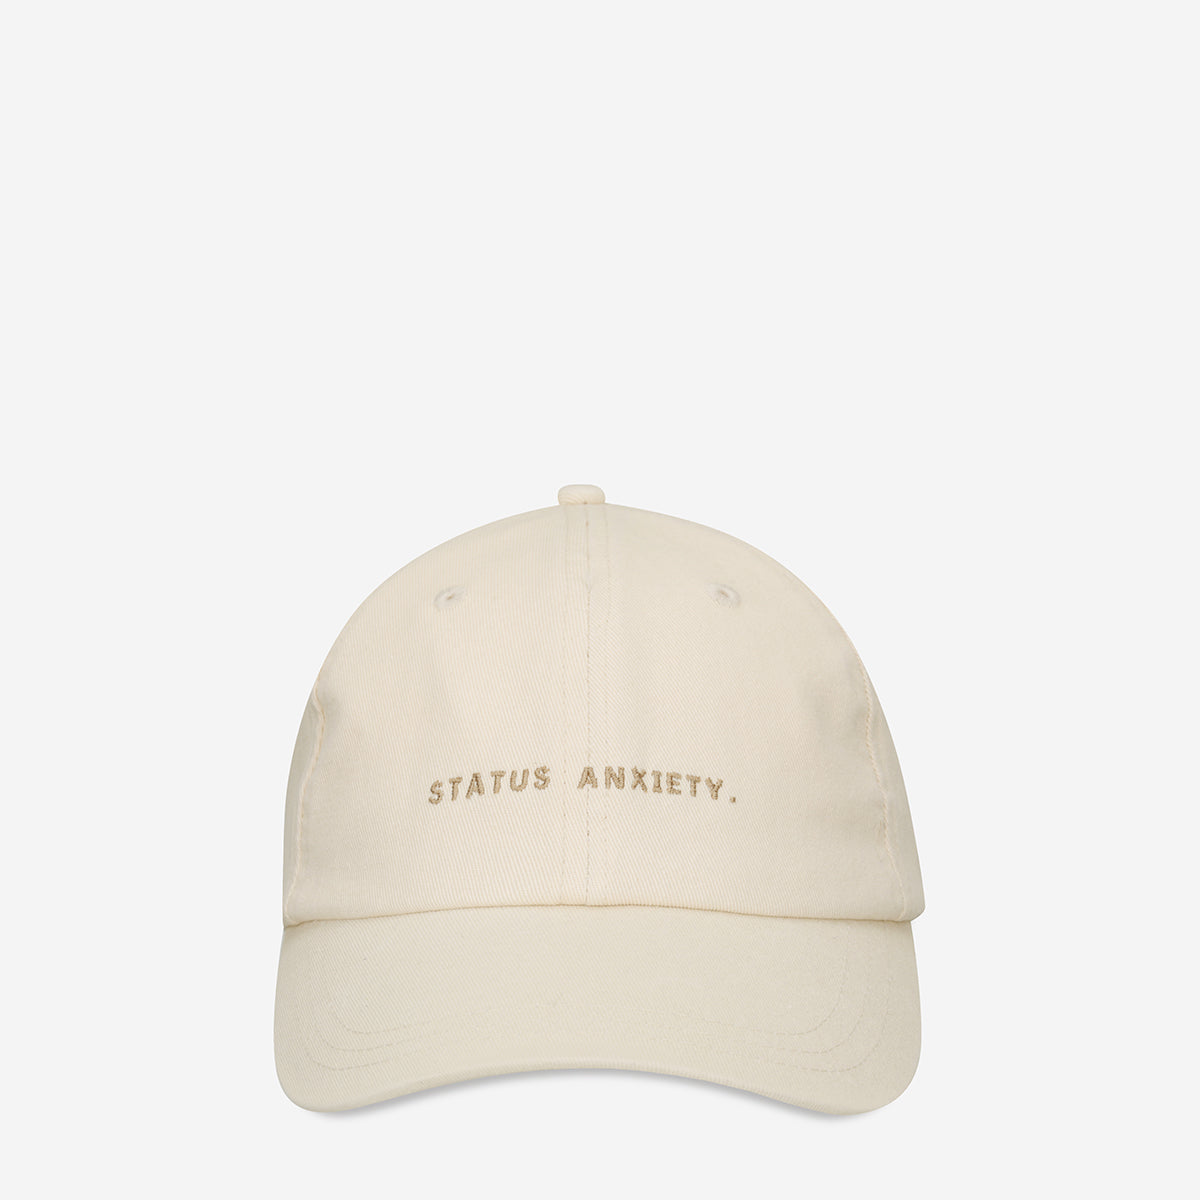 Status Anxiety Under the Sun Hat Cream